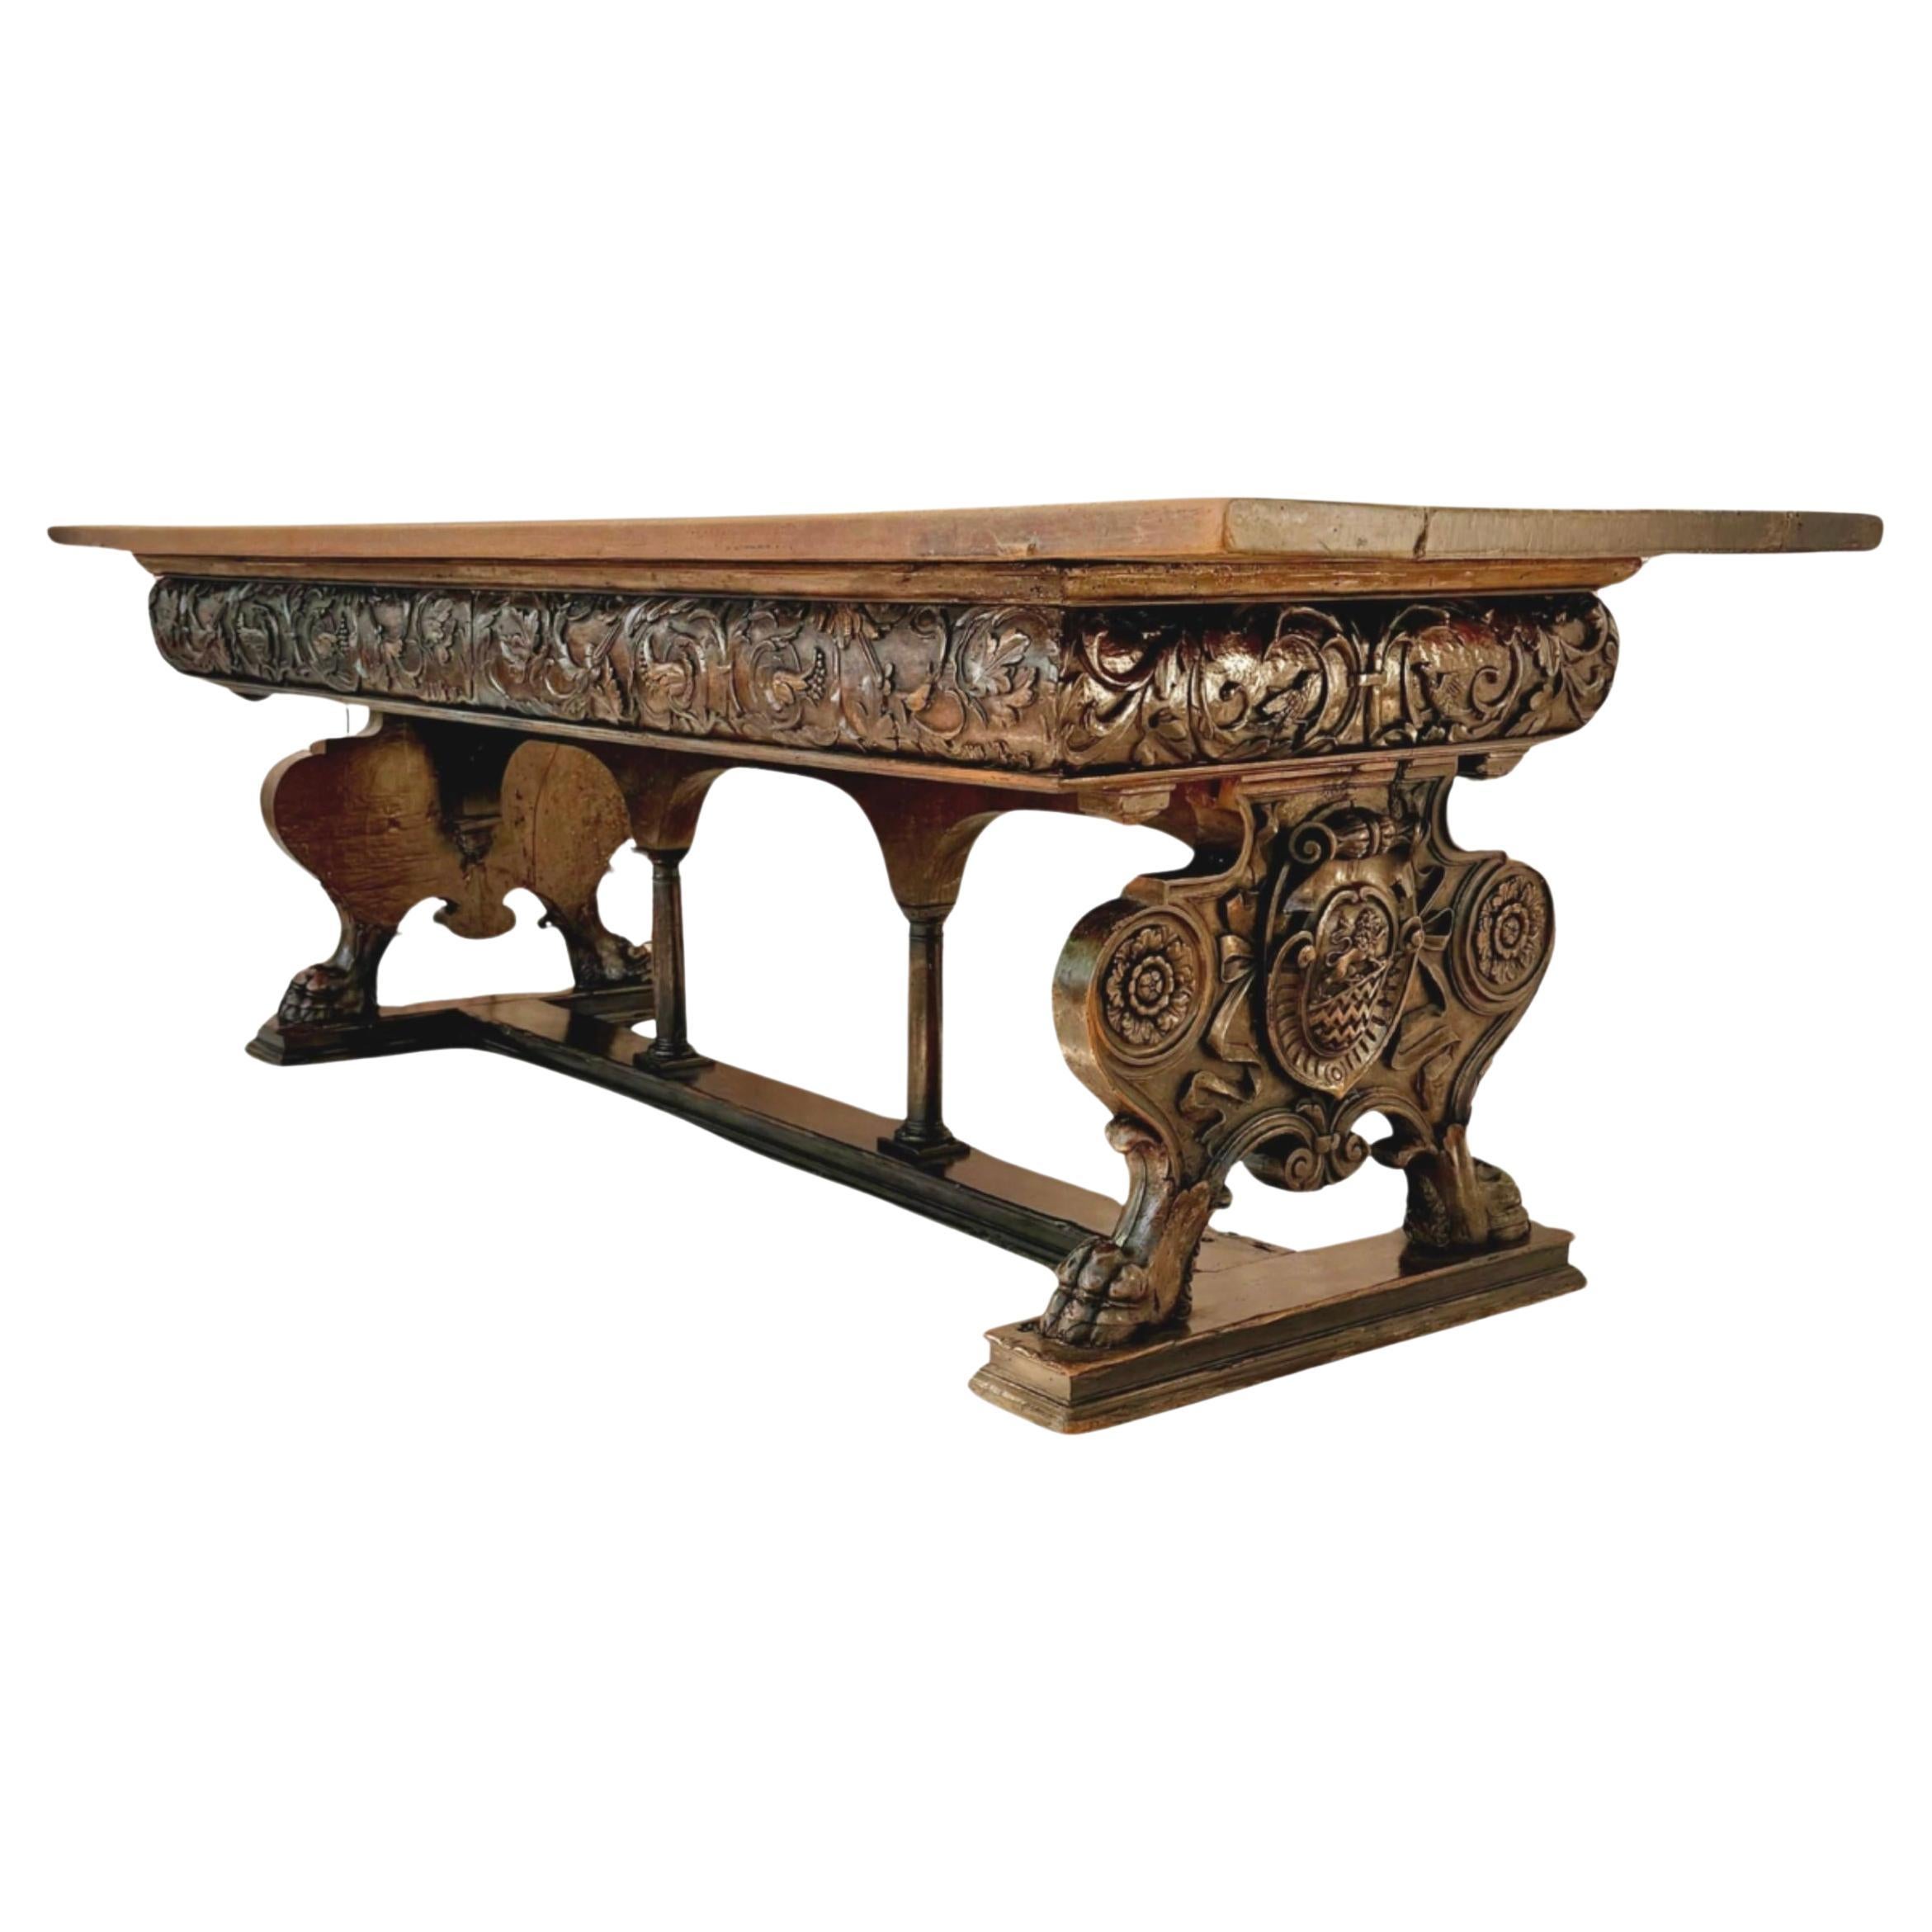 Magnificent 17th Century Italian Renaissance Walnut Trestle Table